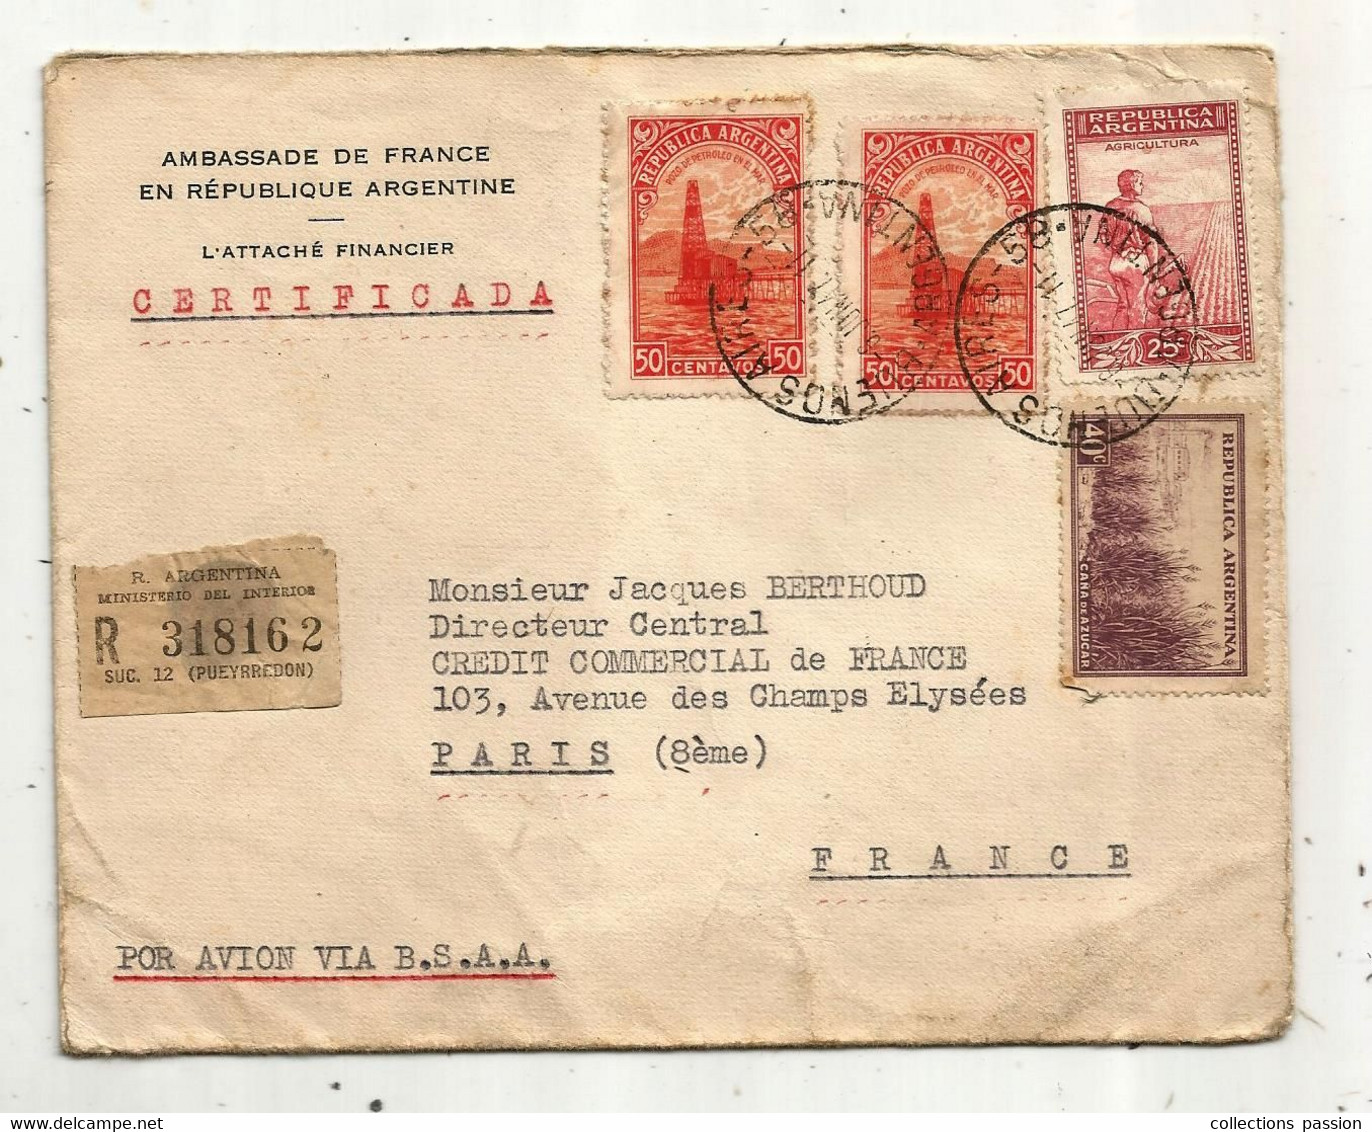 Lettre , Republica Argentina , BUENOS AIRES 58 ,1947, Ambassade De France ,CERTIFICADA ,R Suc. 12 (PUEYRREDON) - Briefe U. Dokumente